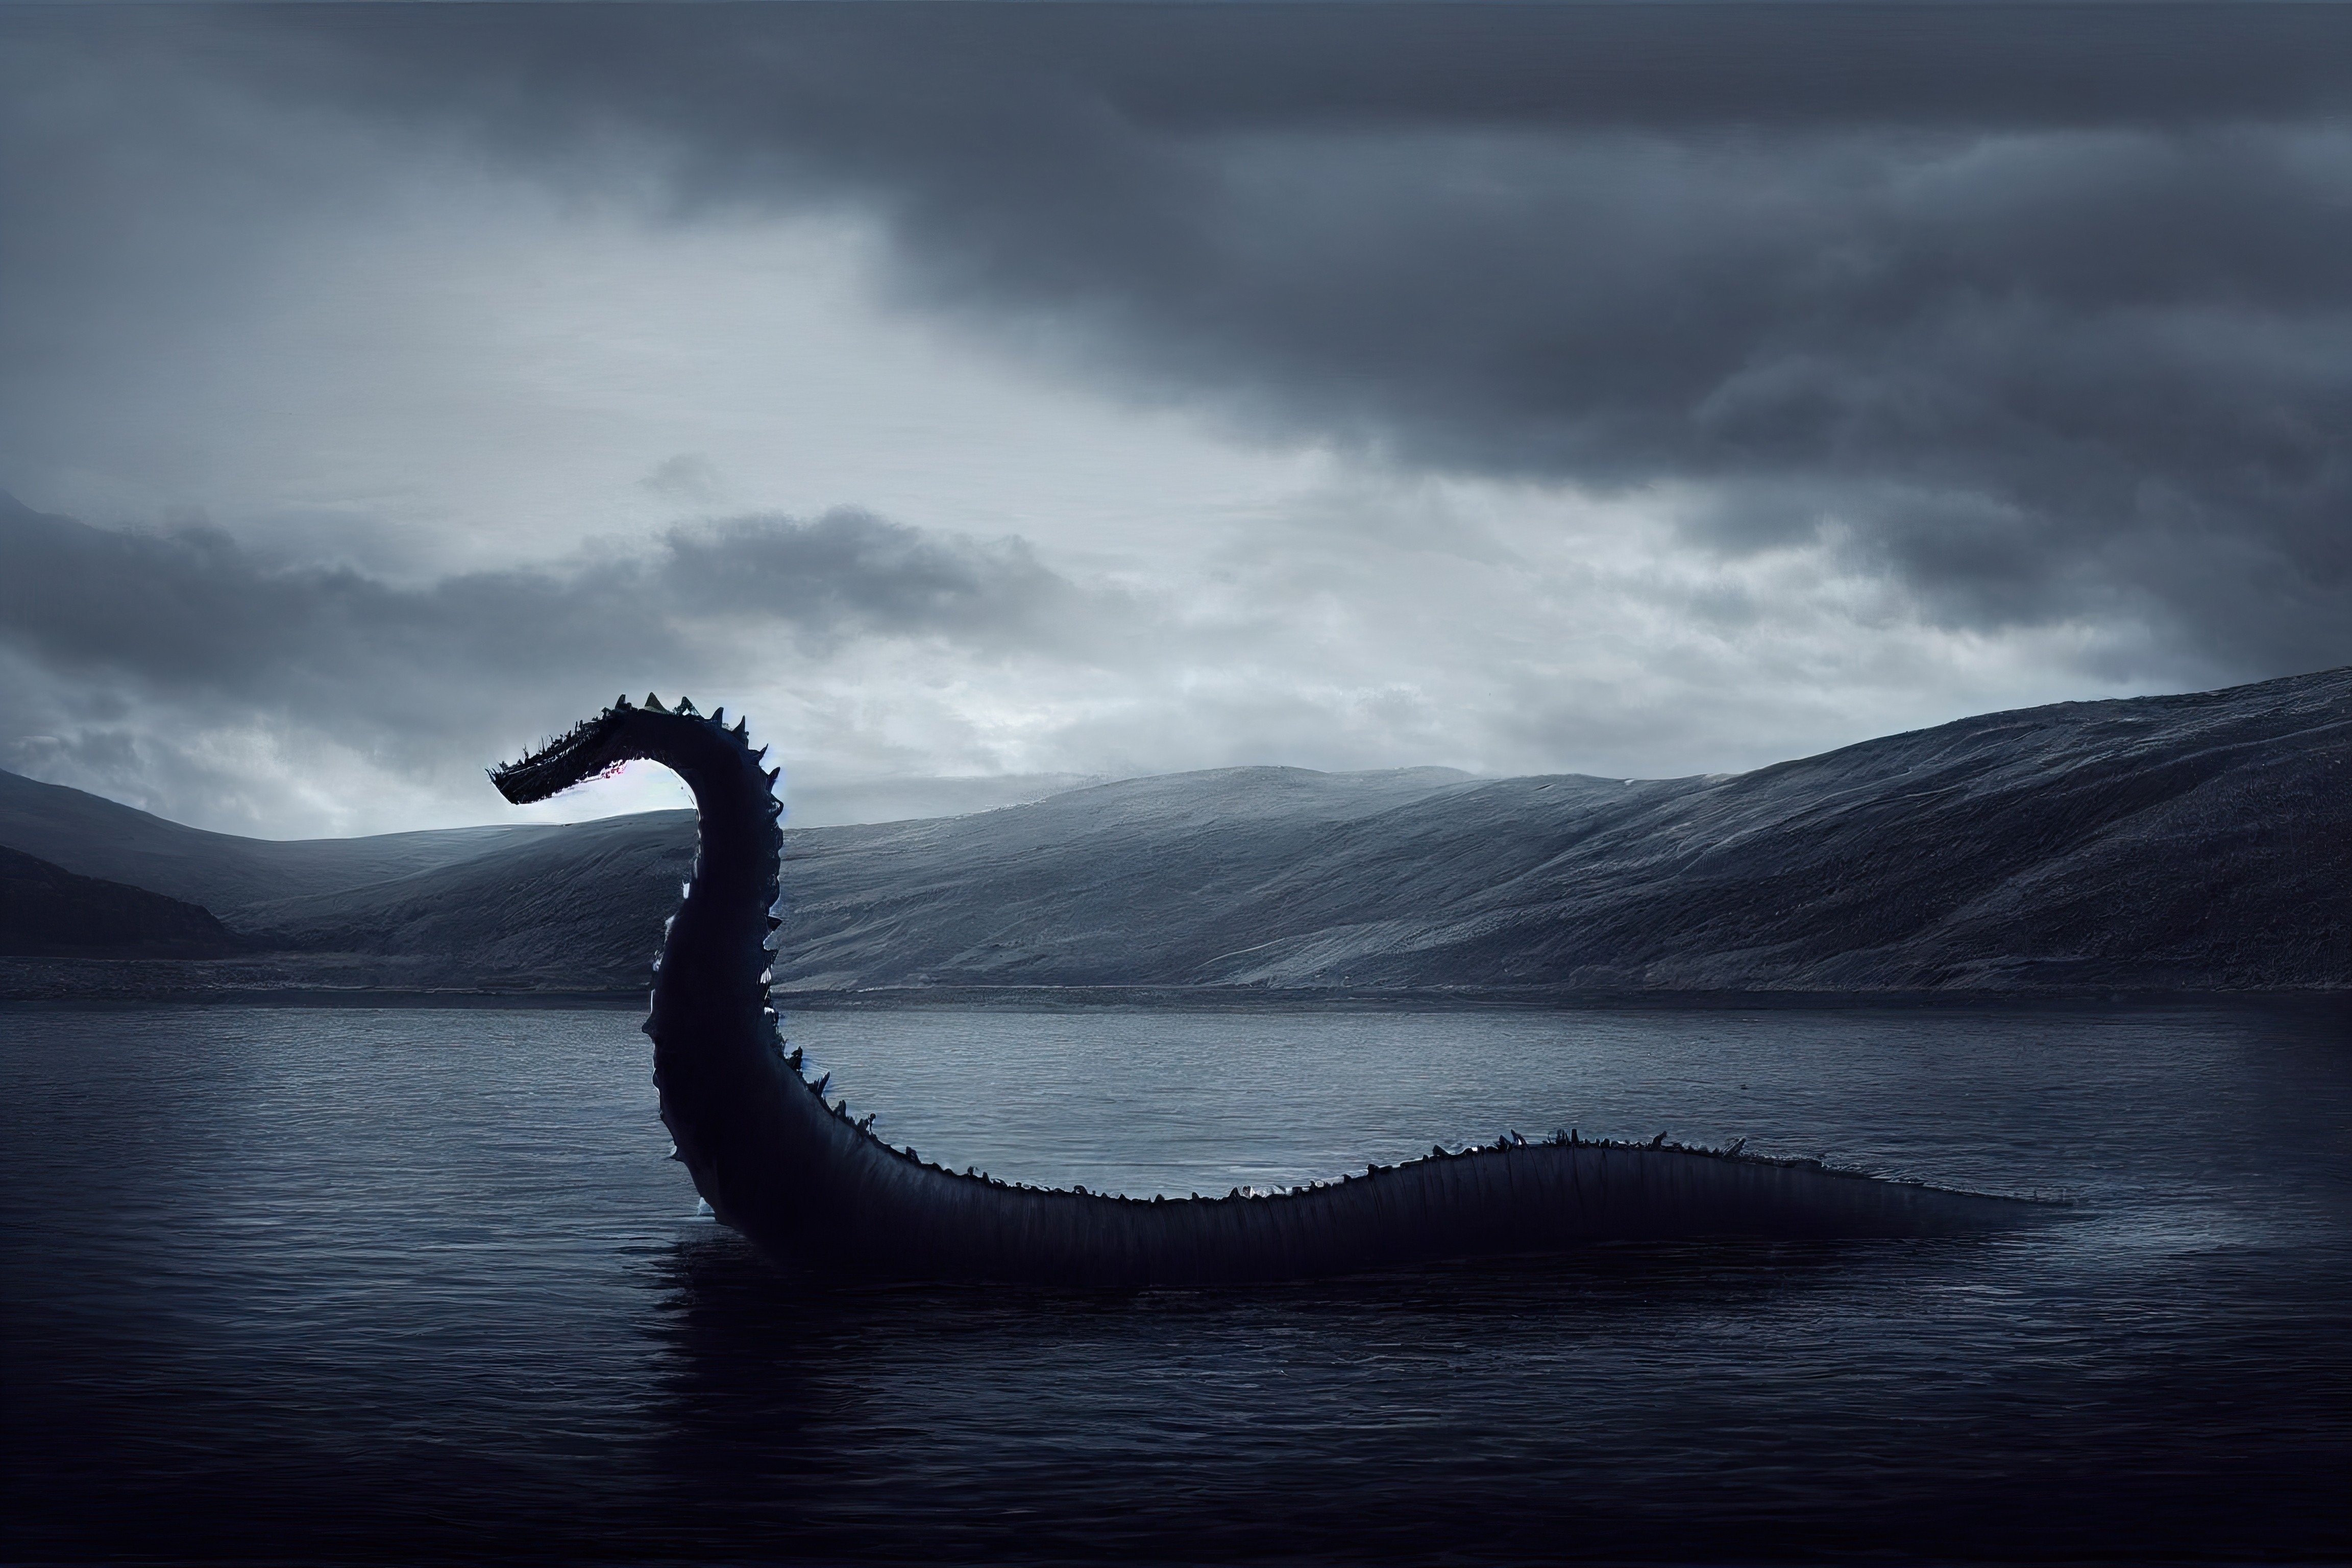 El monstruo del lago Ness